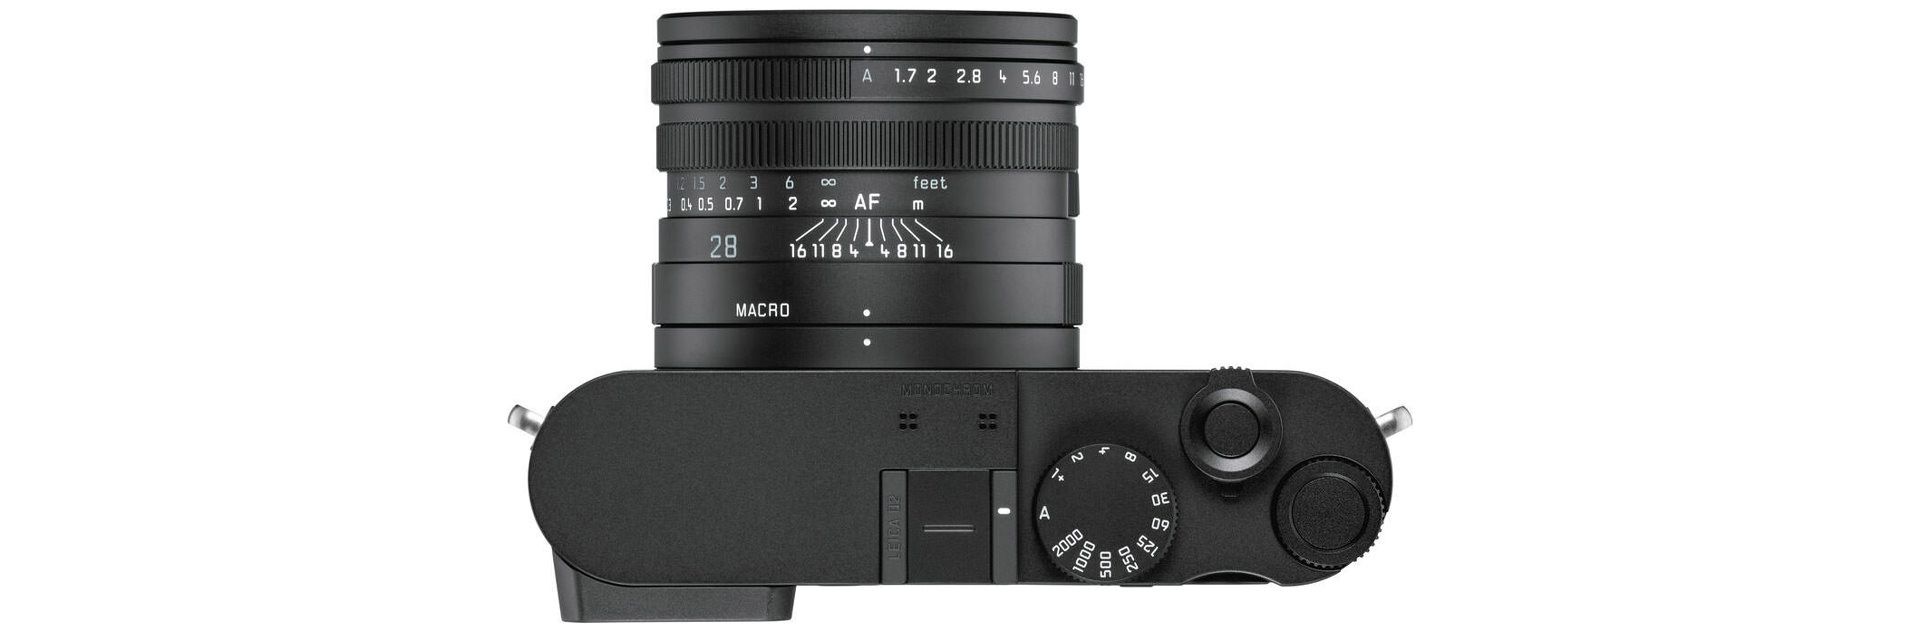 مرجع متخصصين ايران بخش بالايي لايكا كيو 2 مونوكروم / Leica Q2 Monochrom